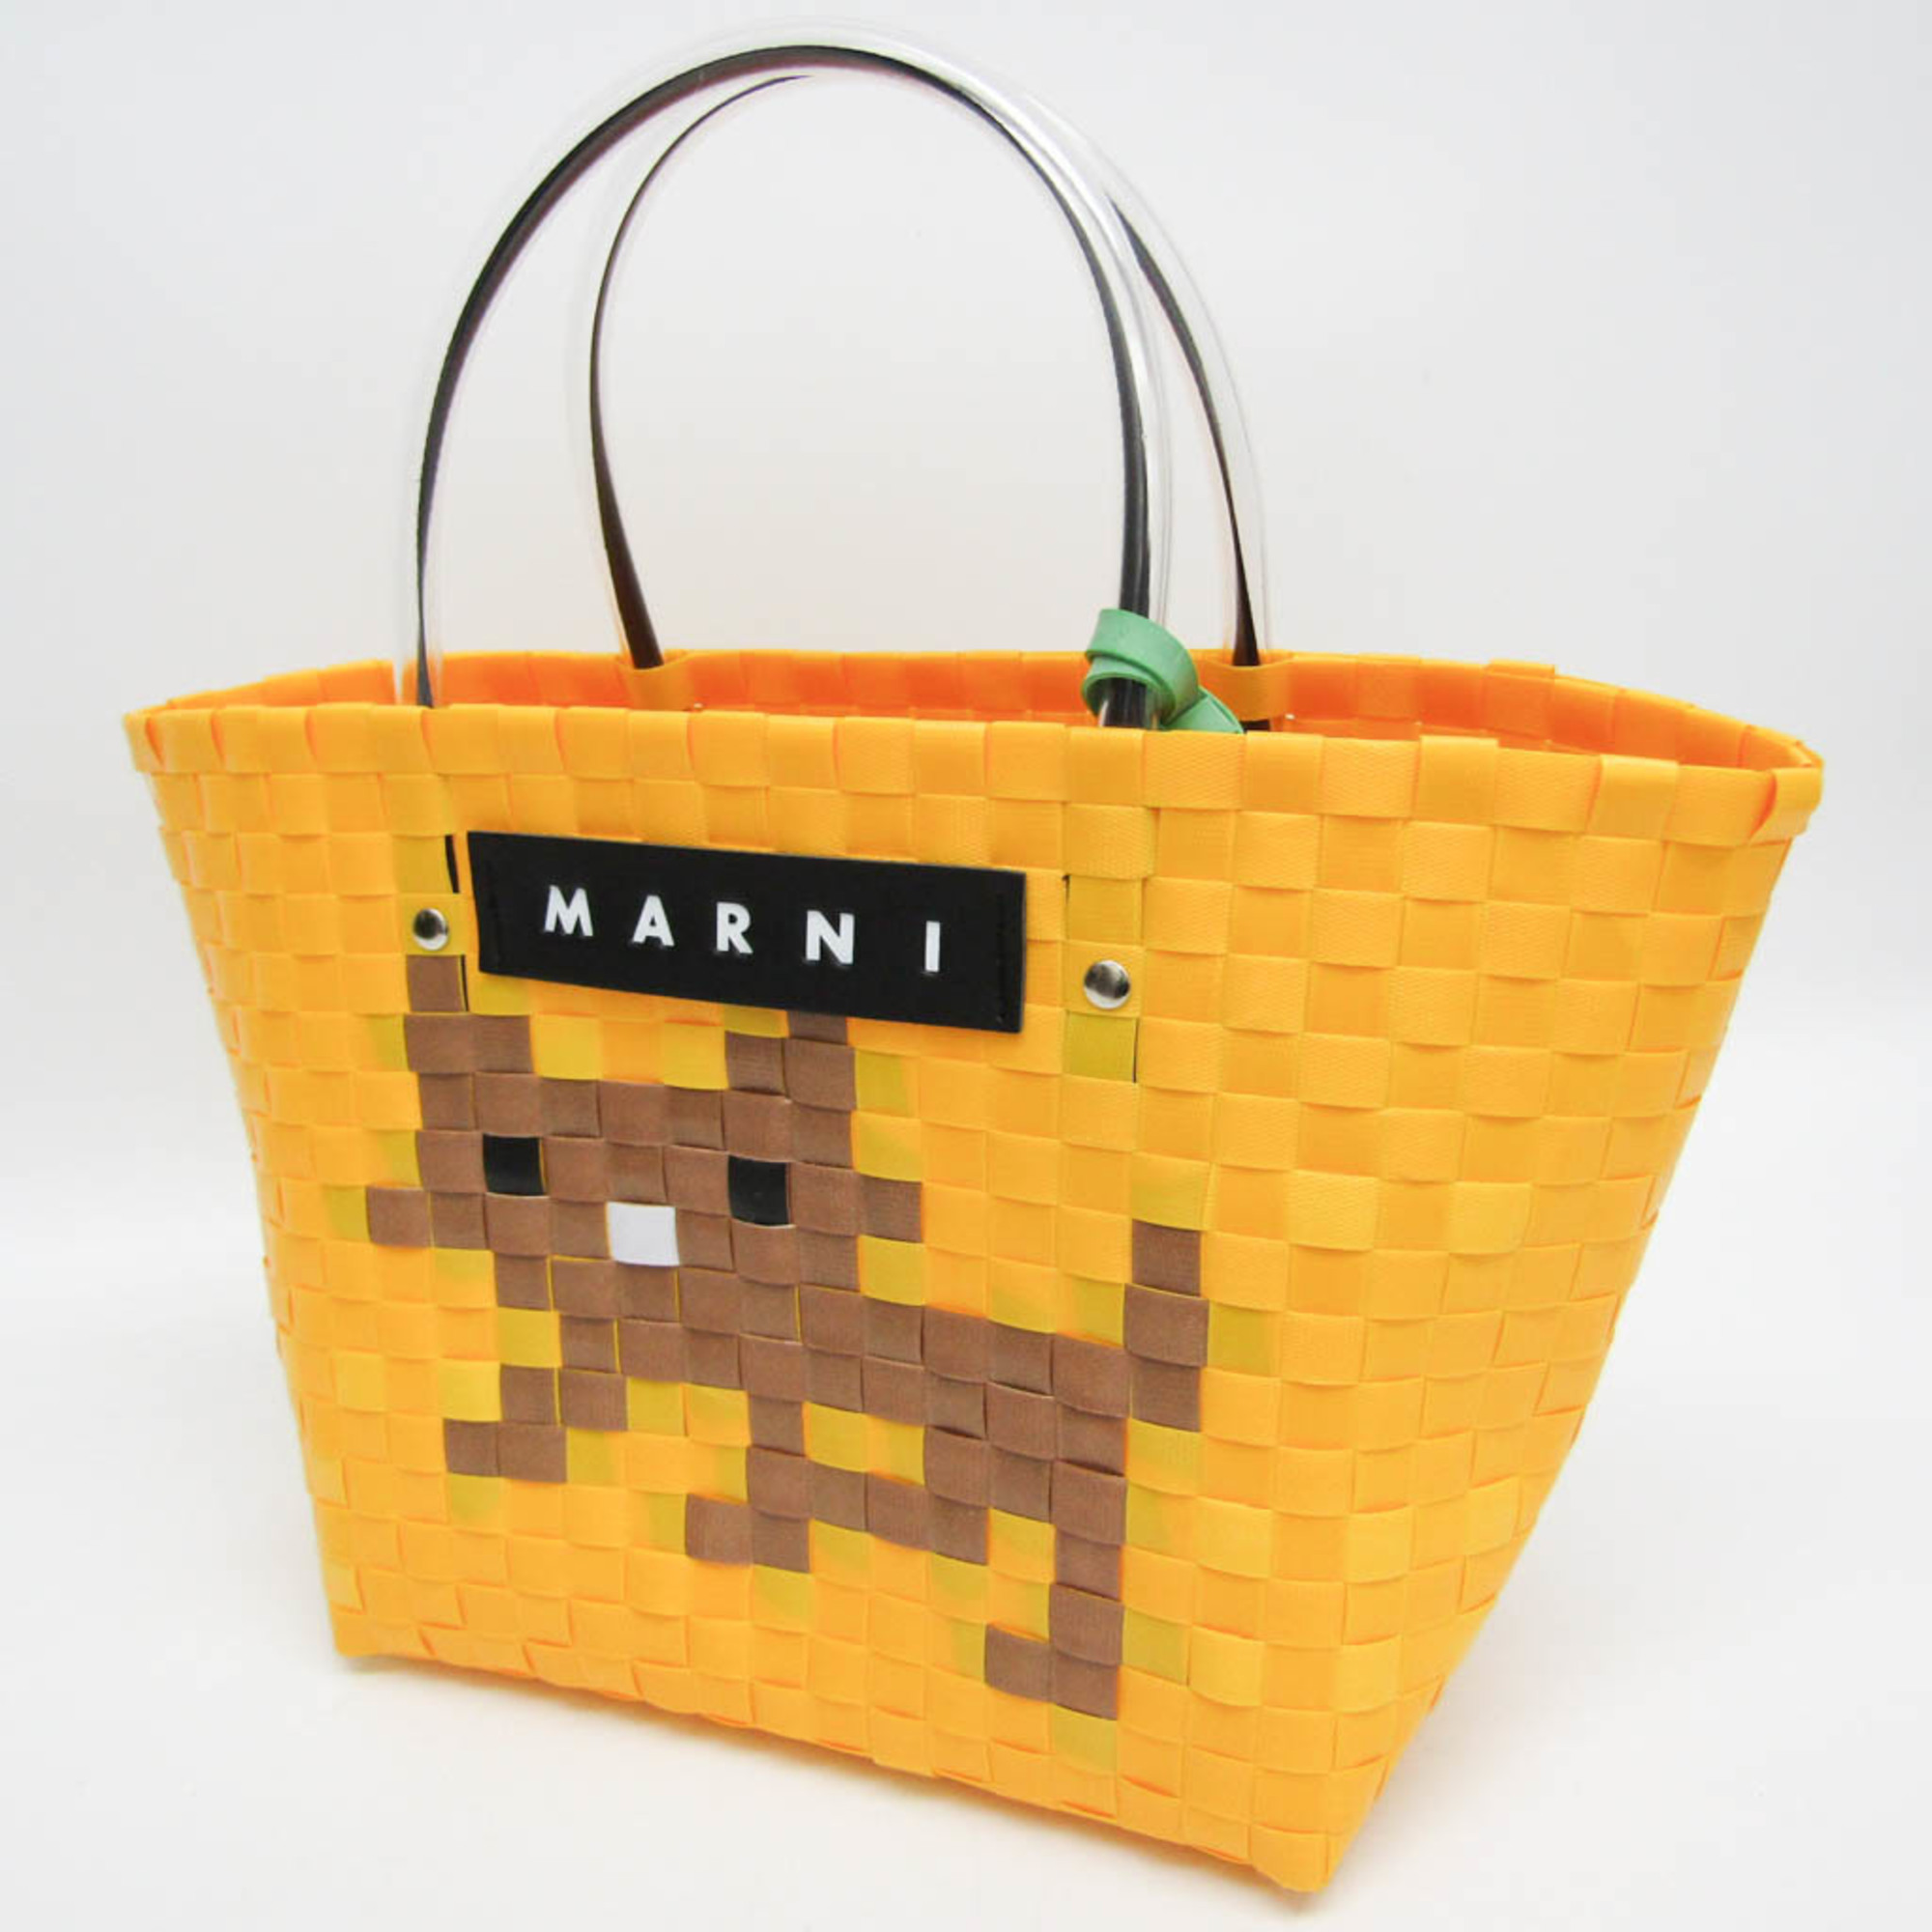 Marni Animal Basket Cat Women's Polypropylene Handbag Brown,Yellow